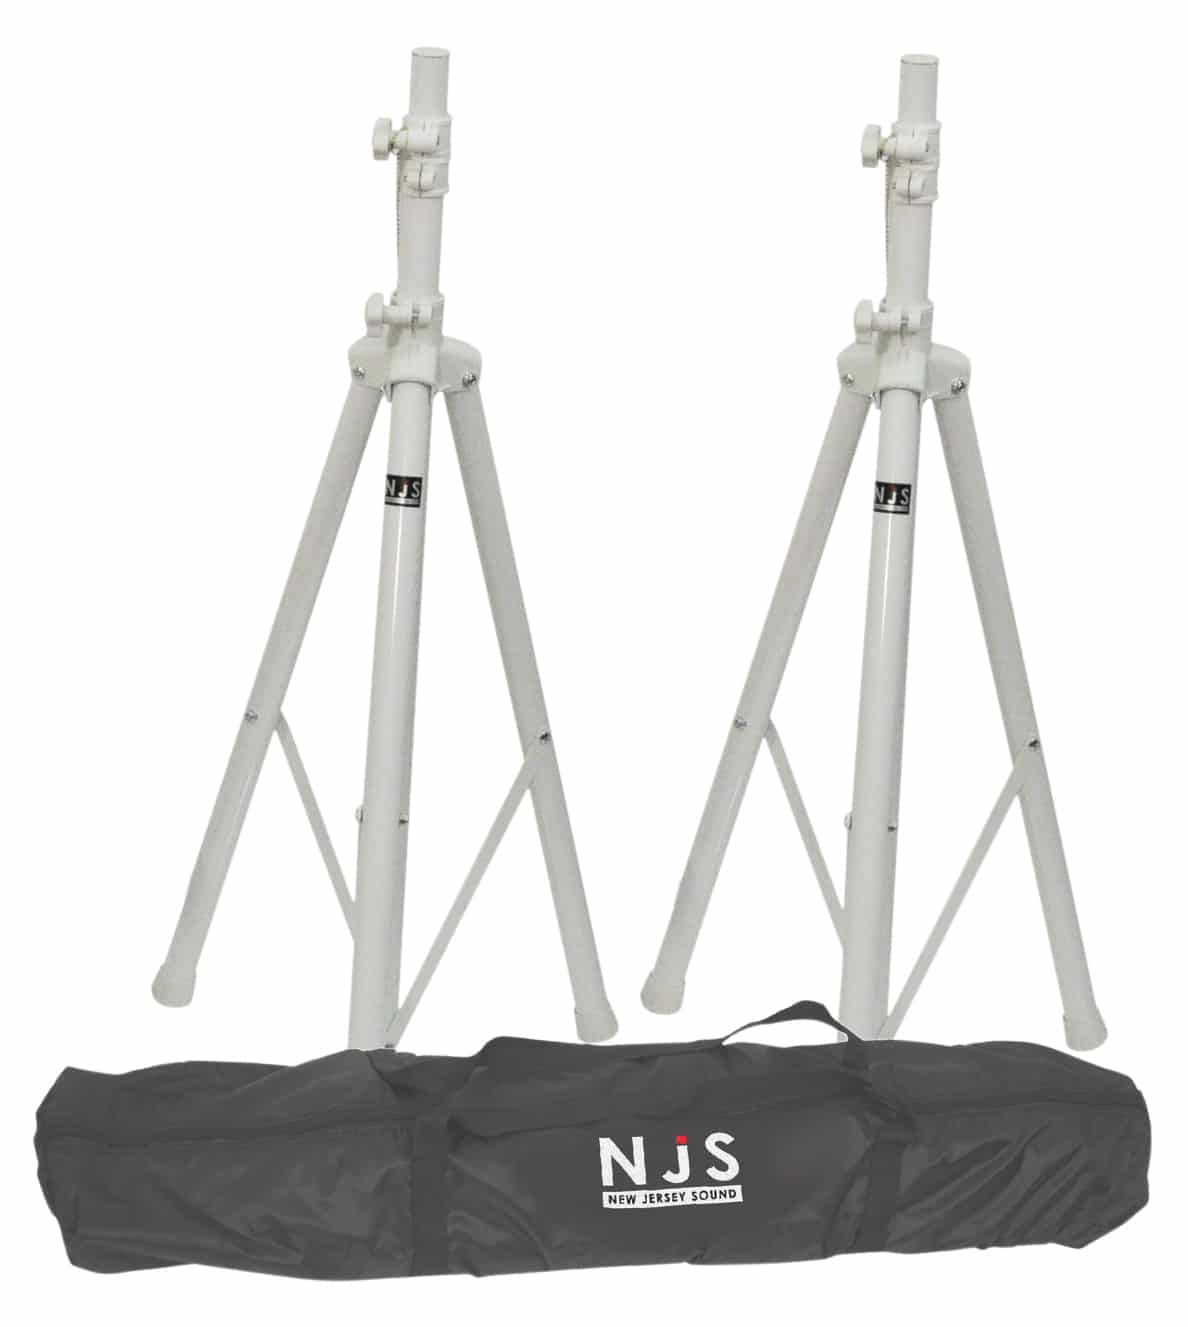 NJS 2 x White Speaker Stand and Carry Bag Kit